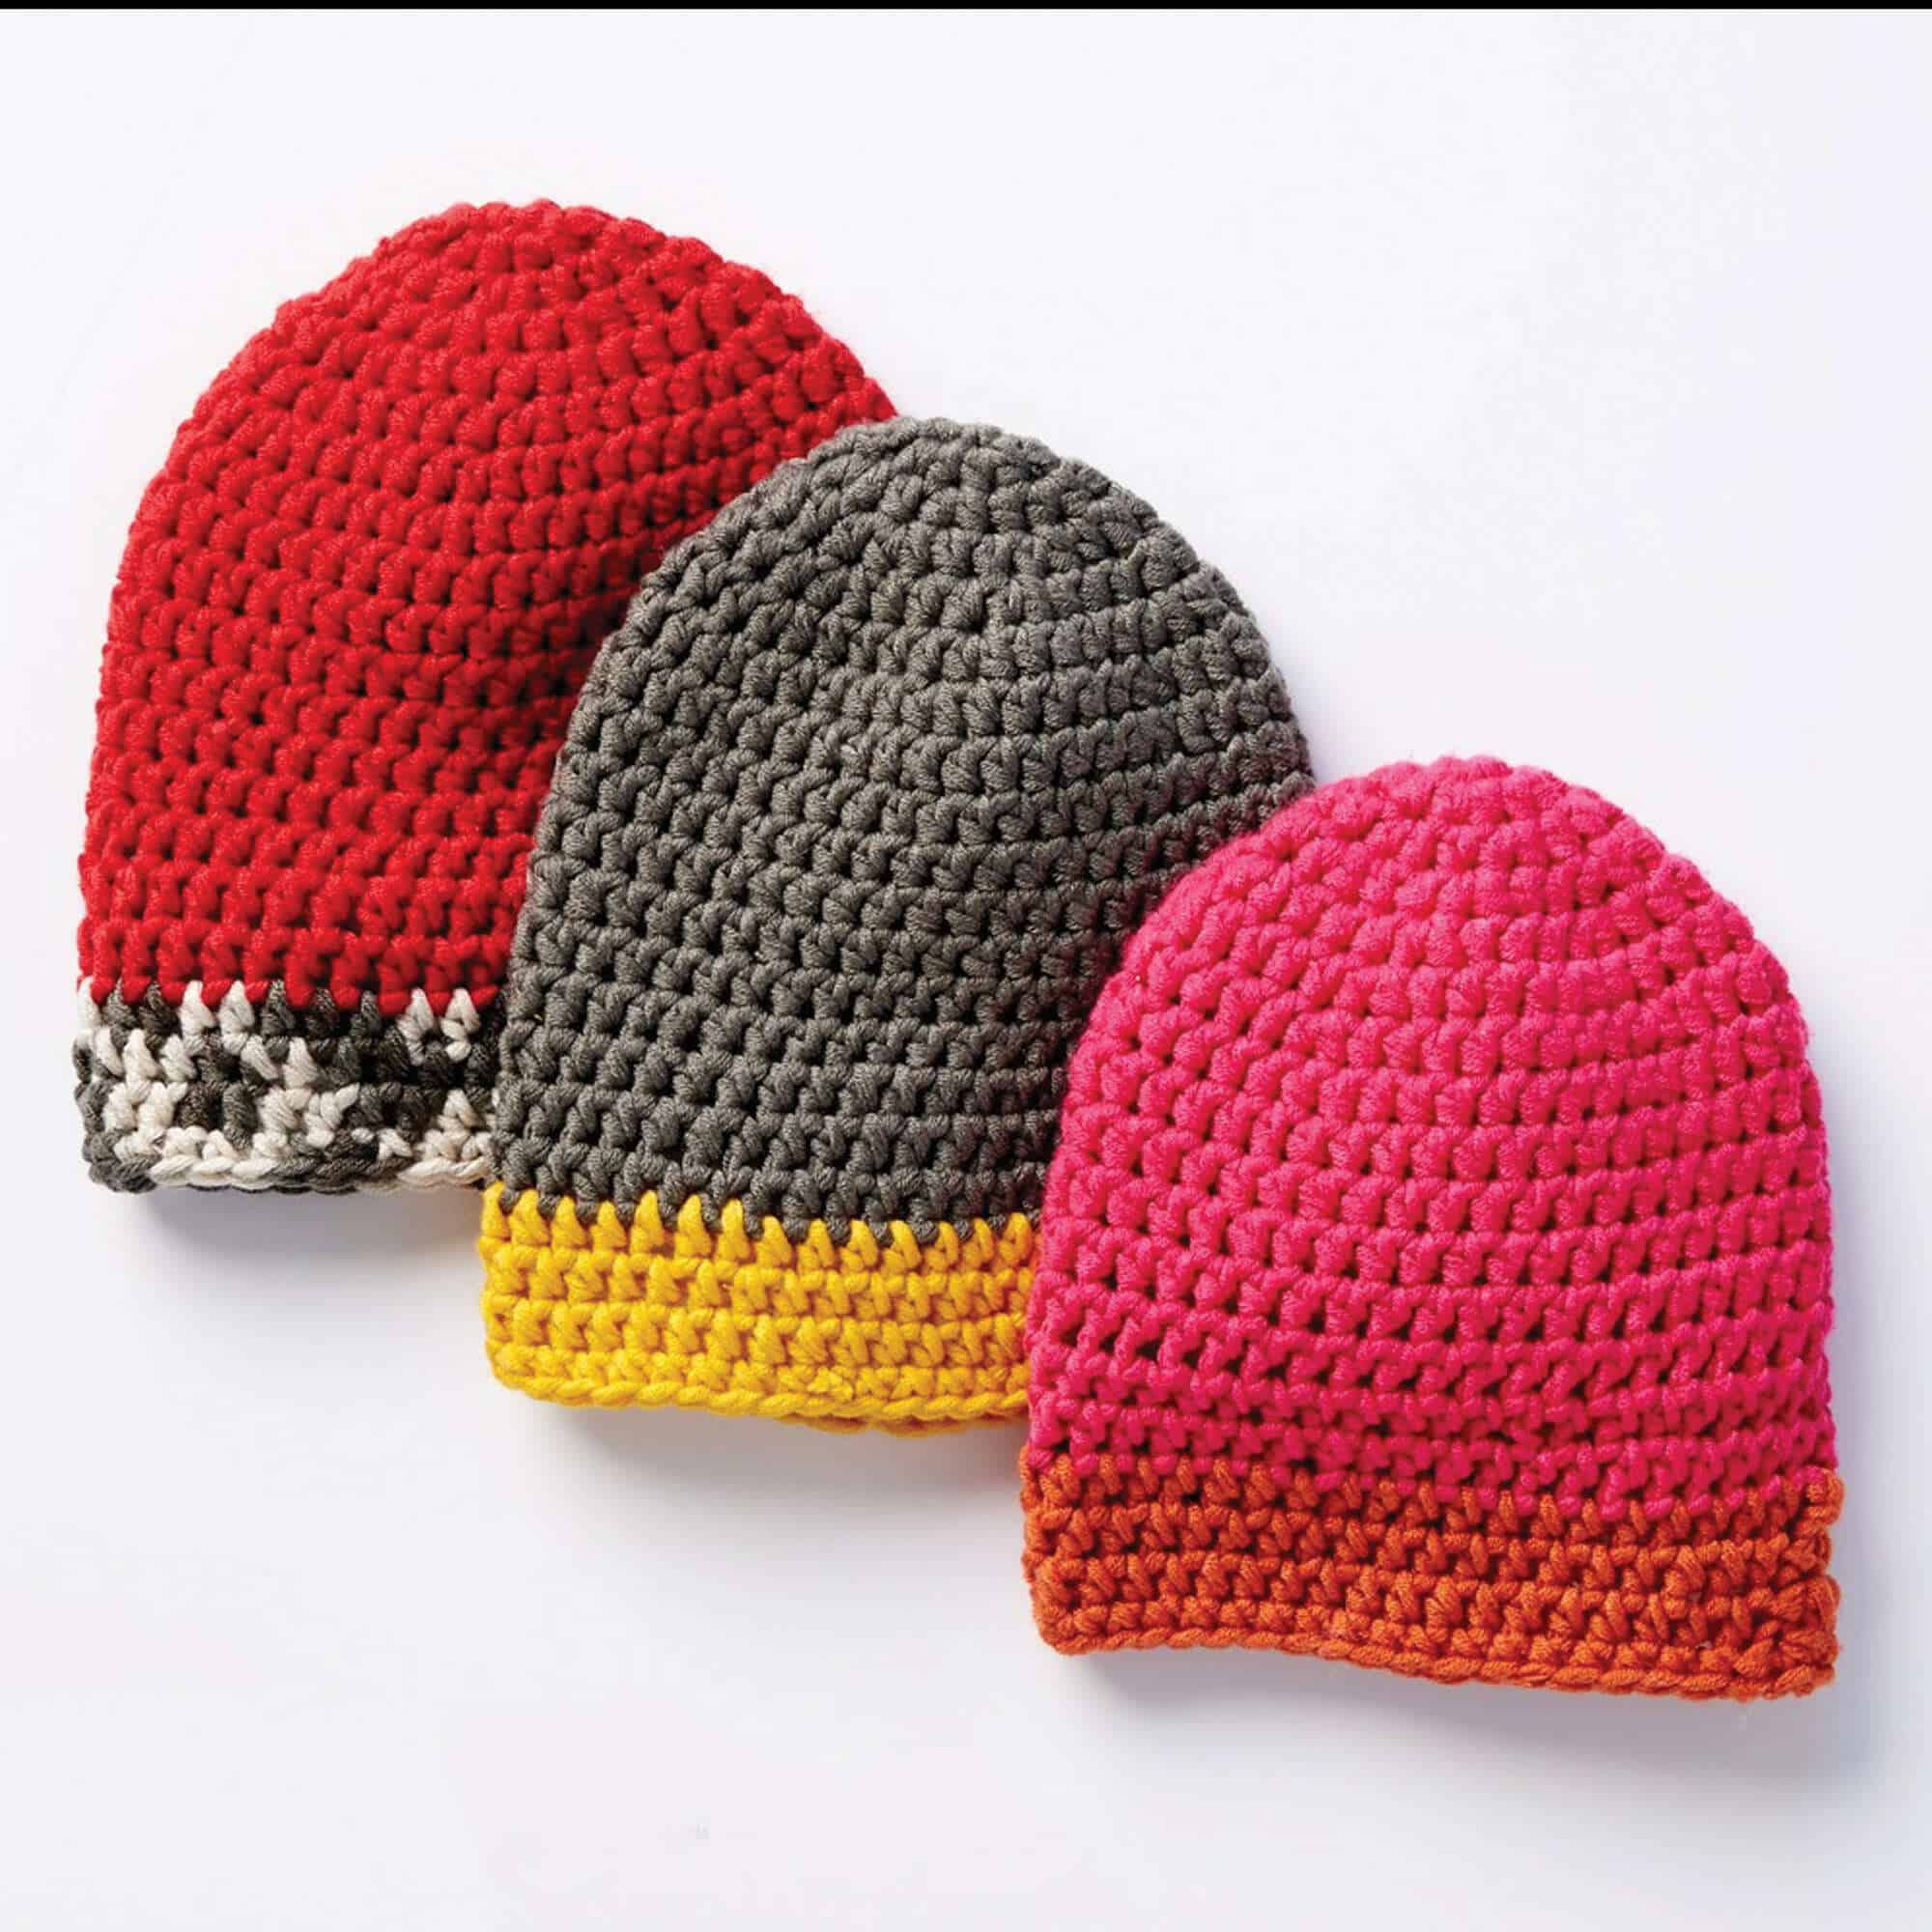 50 Free Crochet Hat Patterns - Daisy Farm Crafts